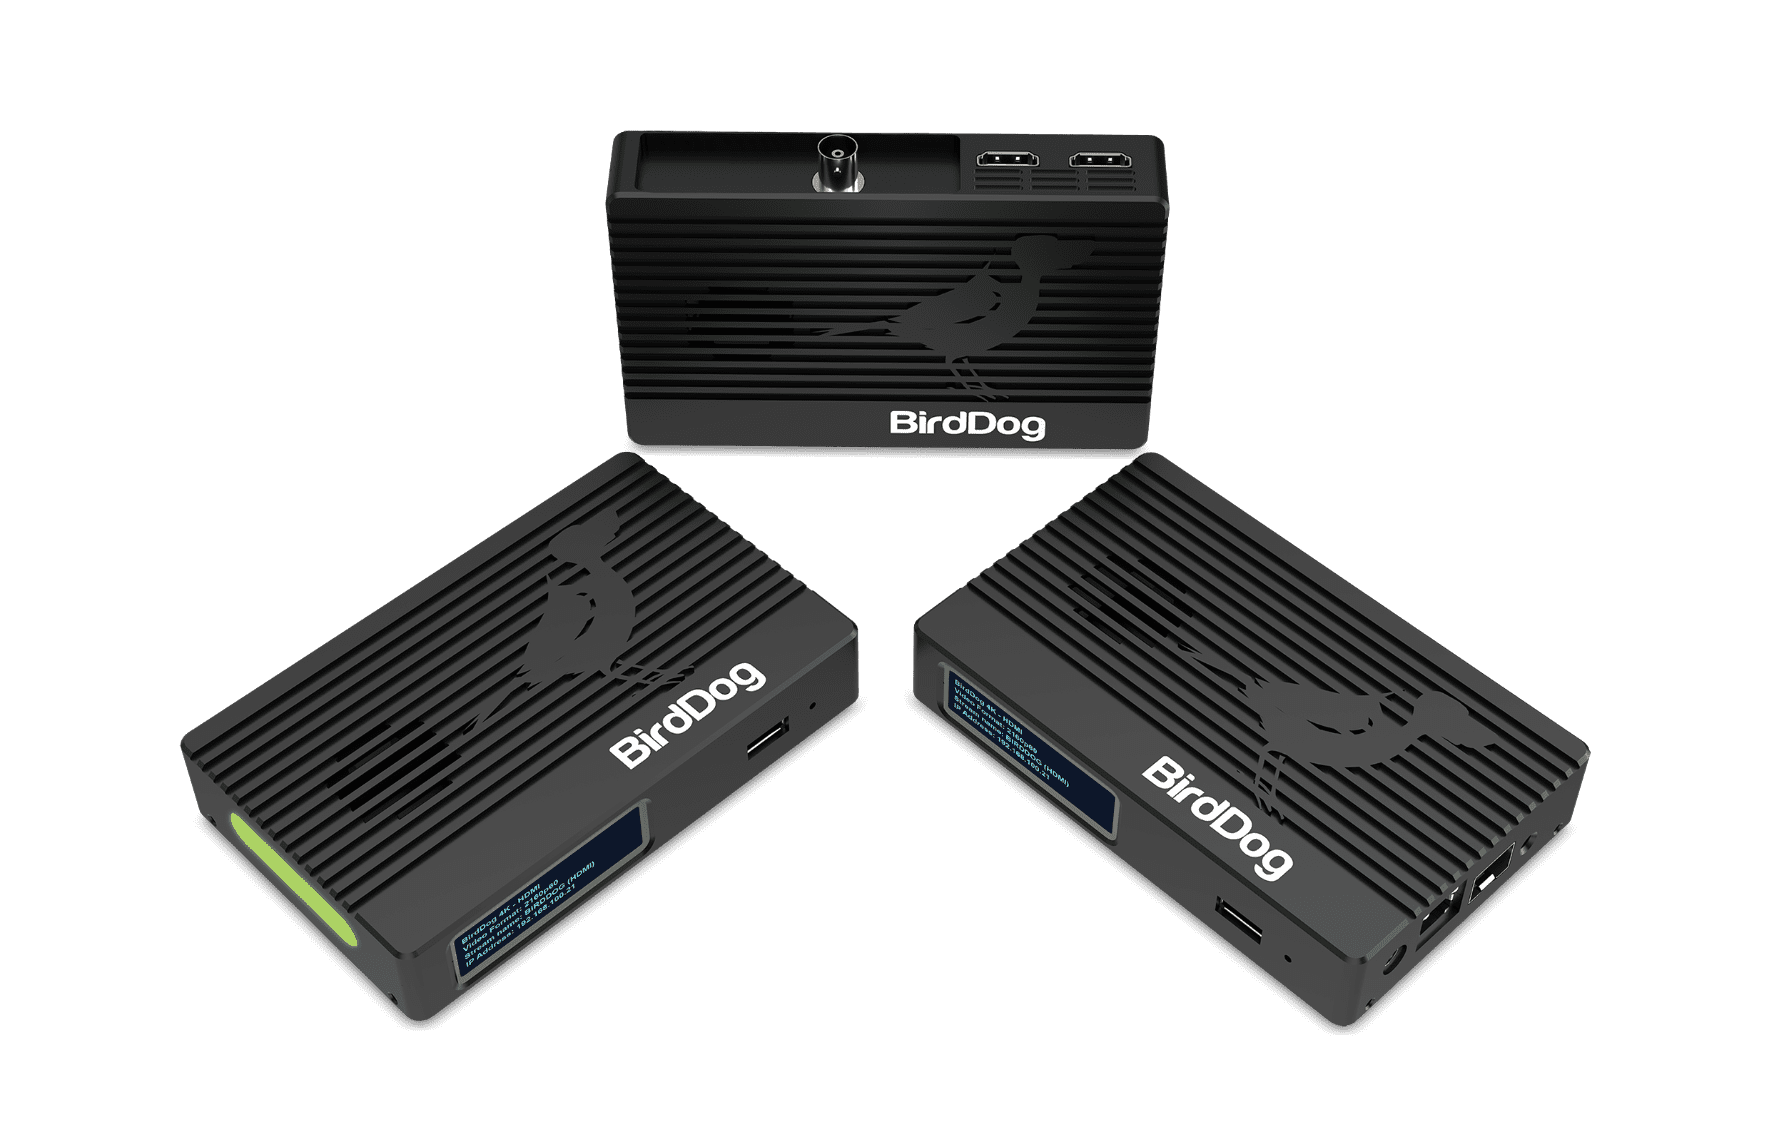 BirdDog 4K HDMI NDI Encoder/Decoder